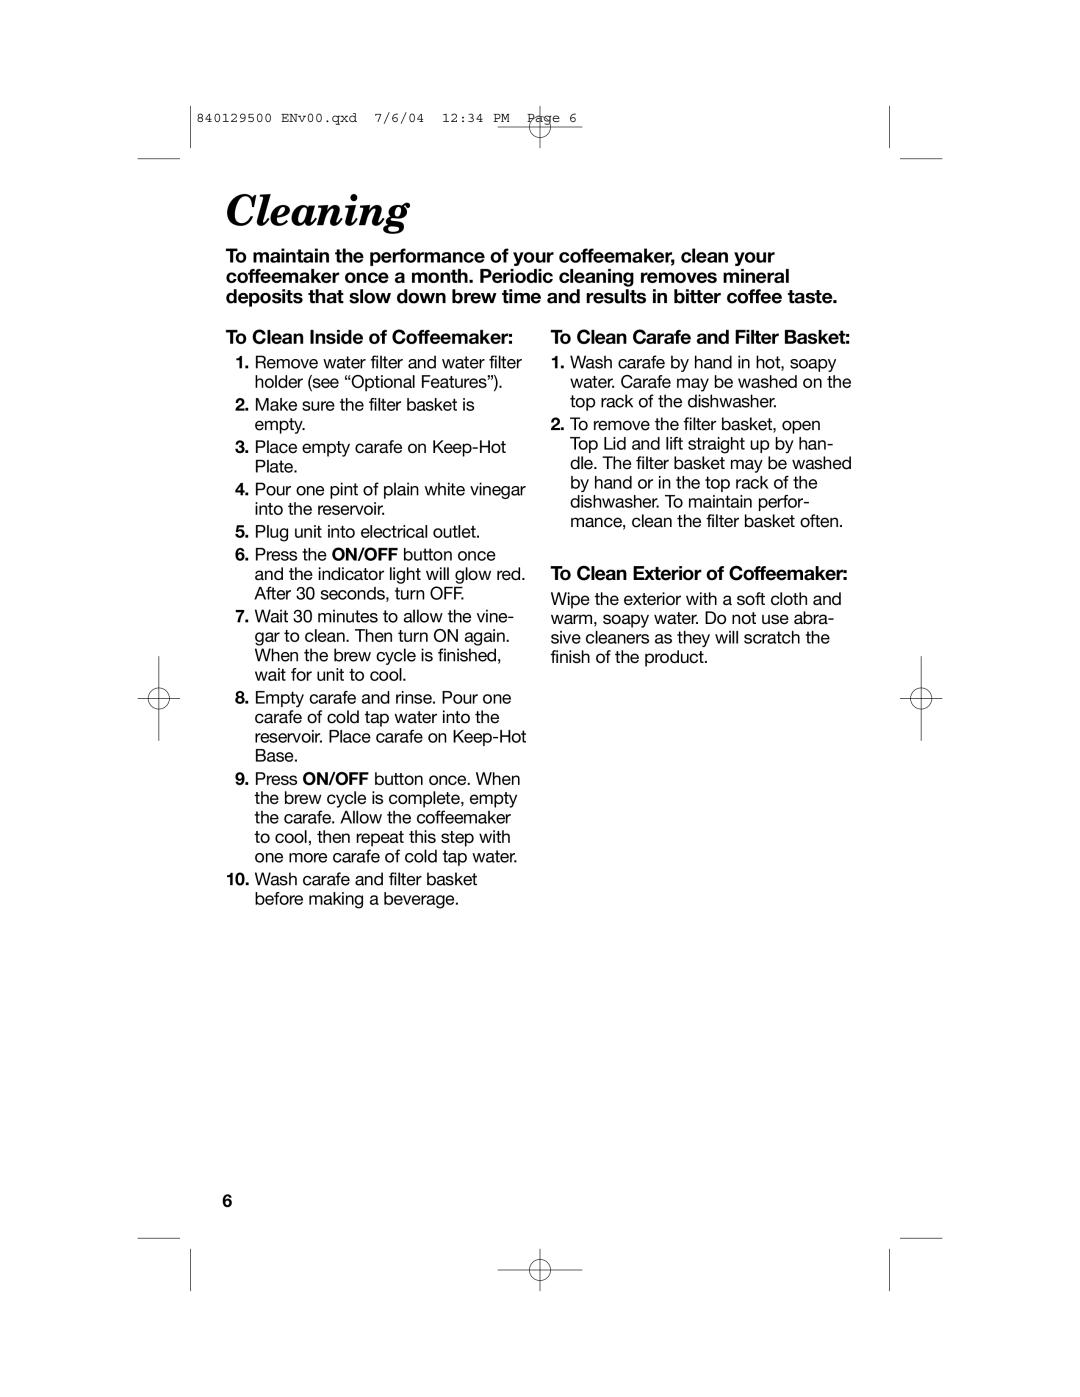 Hamilton Beach Programmable Coffeemaker manual Cleaning, To Clean Inside of Coffeemaker, To Clean Exterior of Coffeemaker 